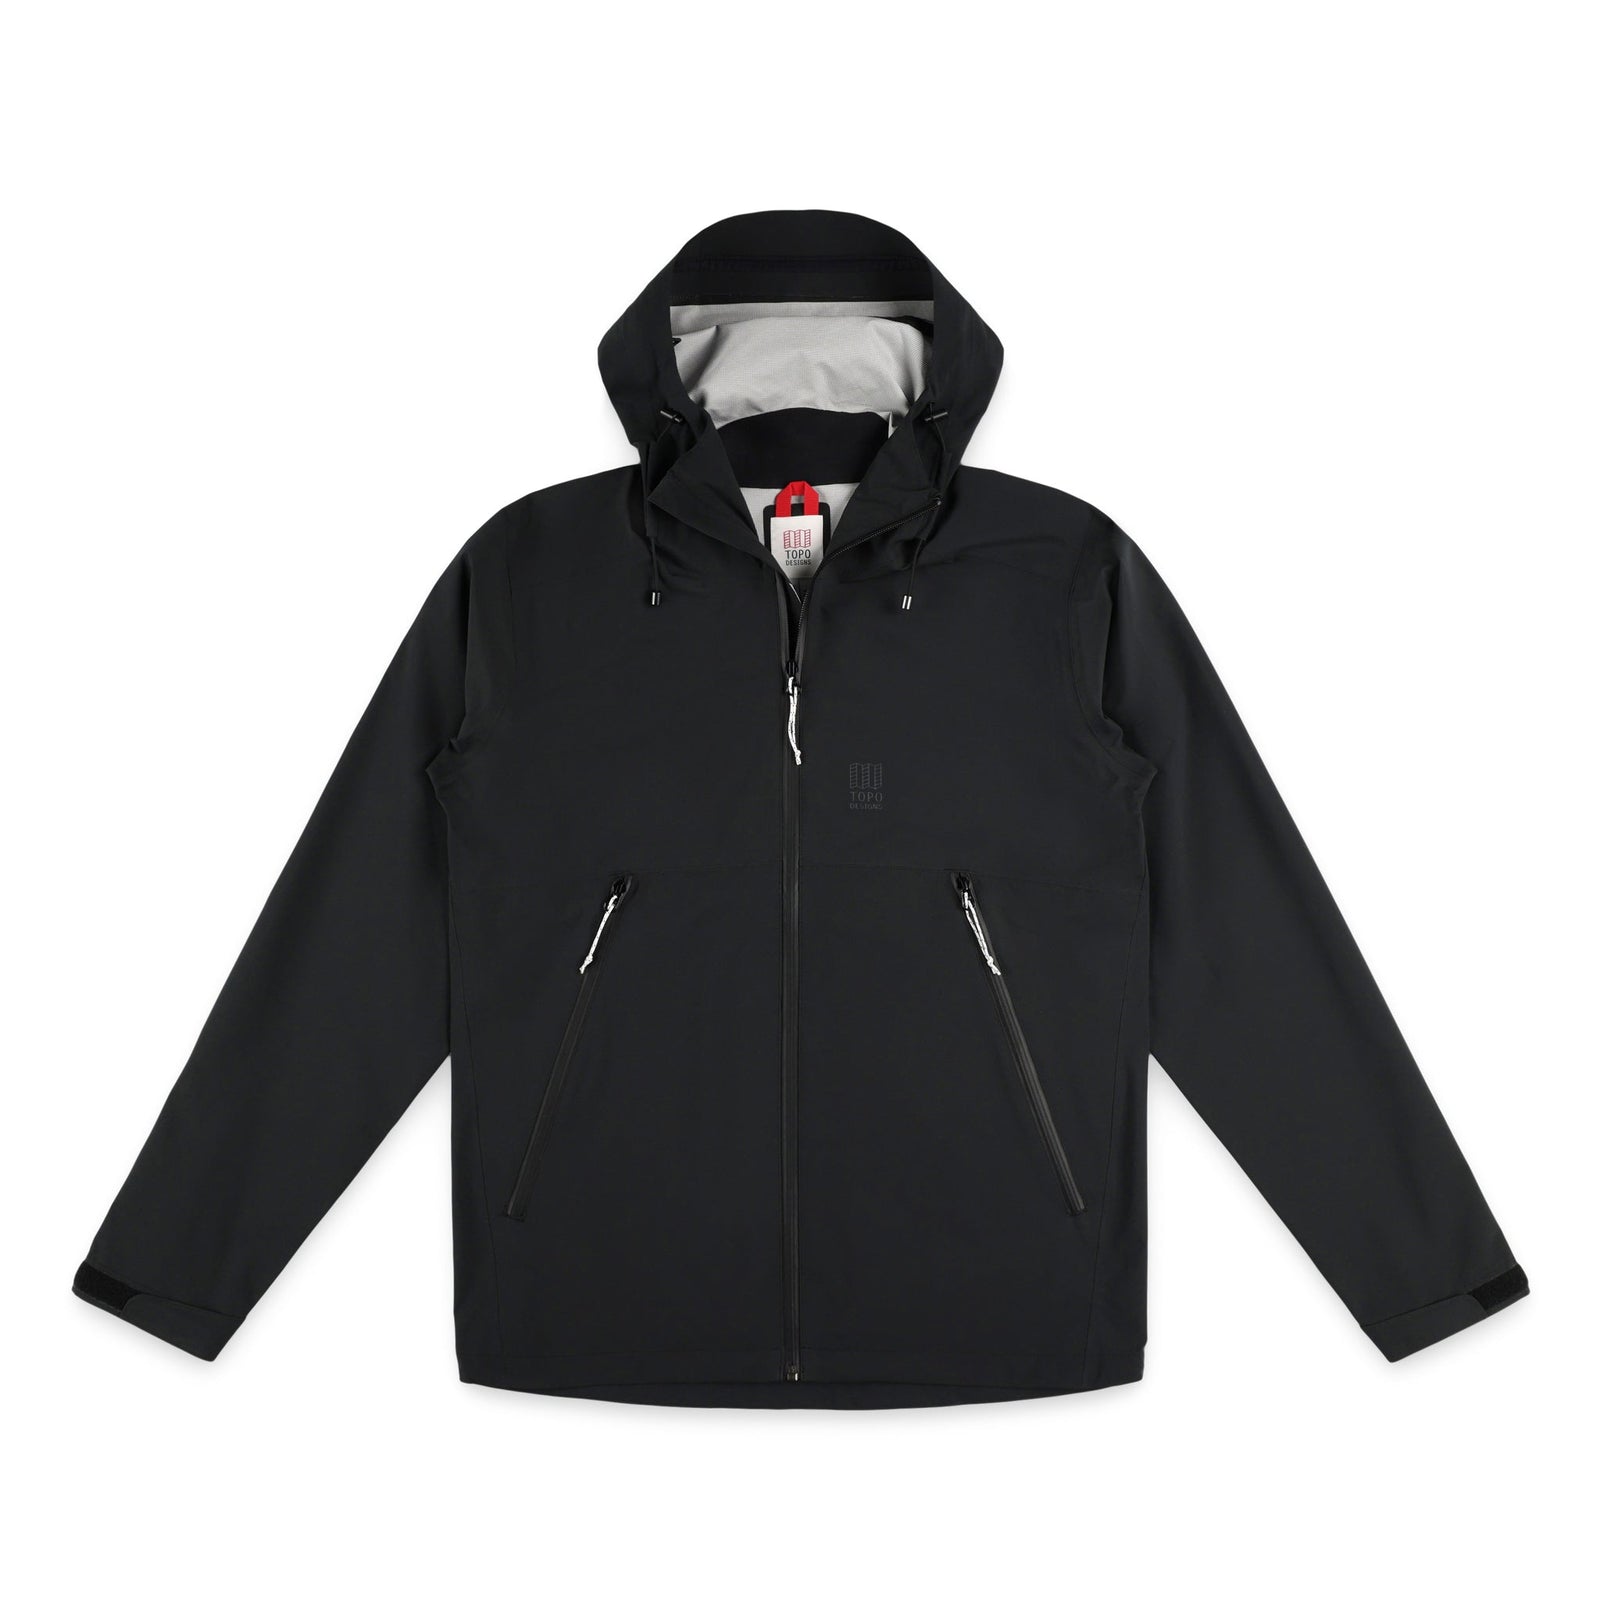 Topo Designs Men's Global Jacket packable 10k waterproof rain shell in recycled "Black" polyester.